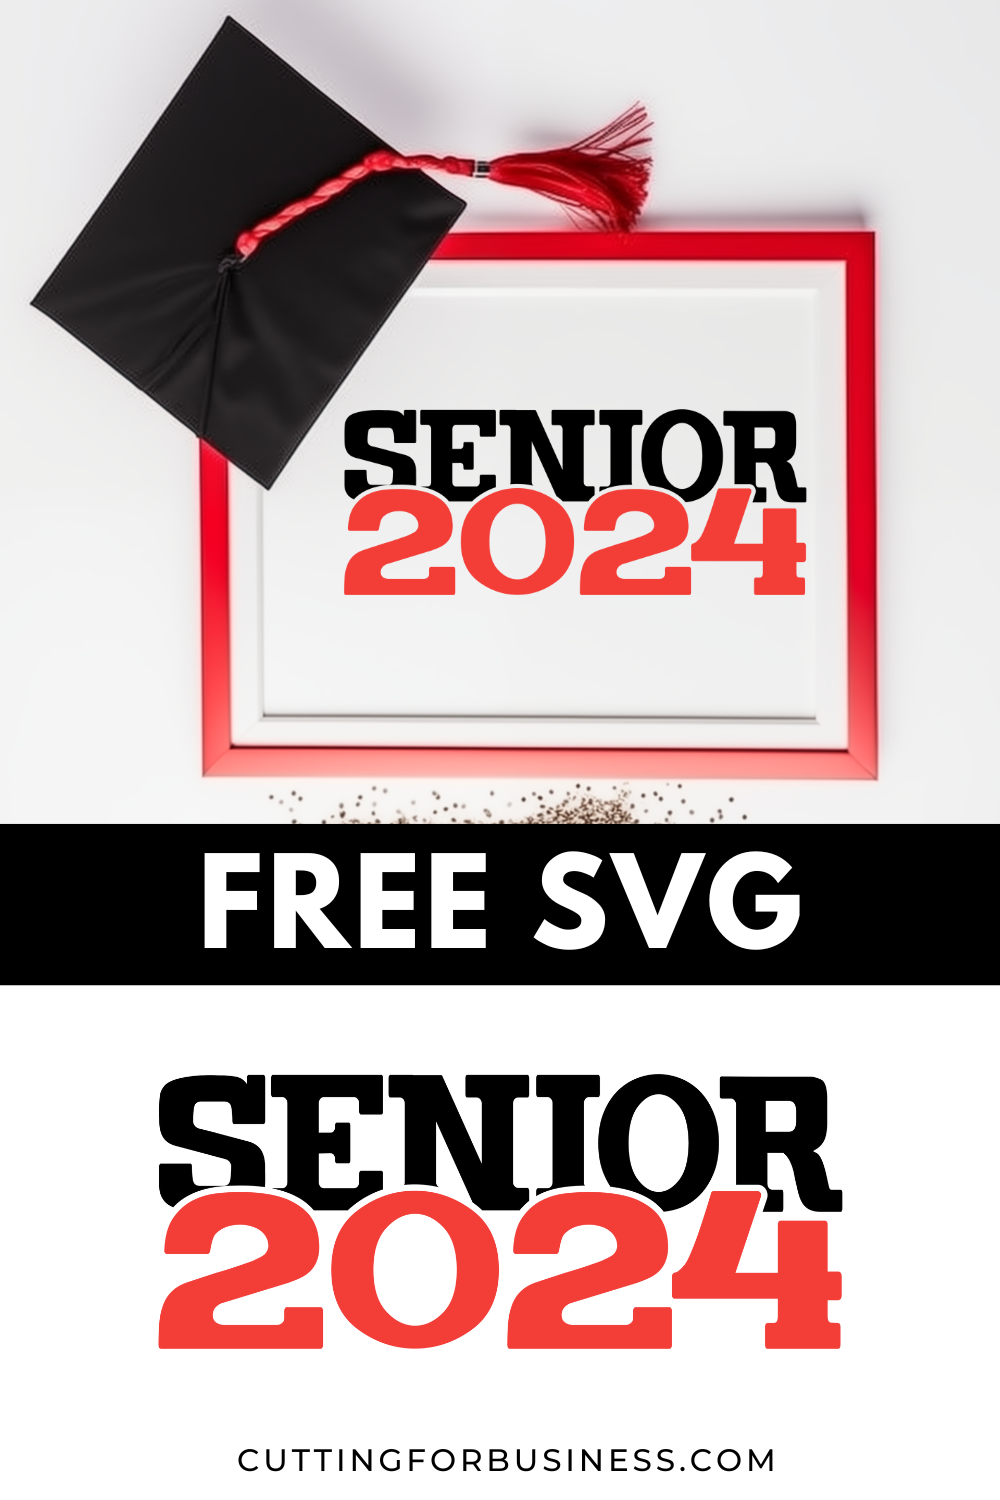 Free Senior 2024 SVG - cuttingforbusiness.com